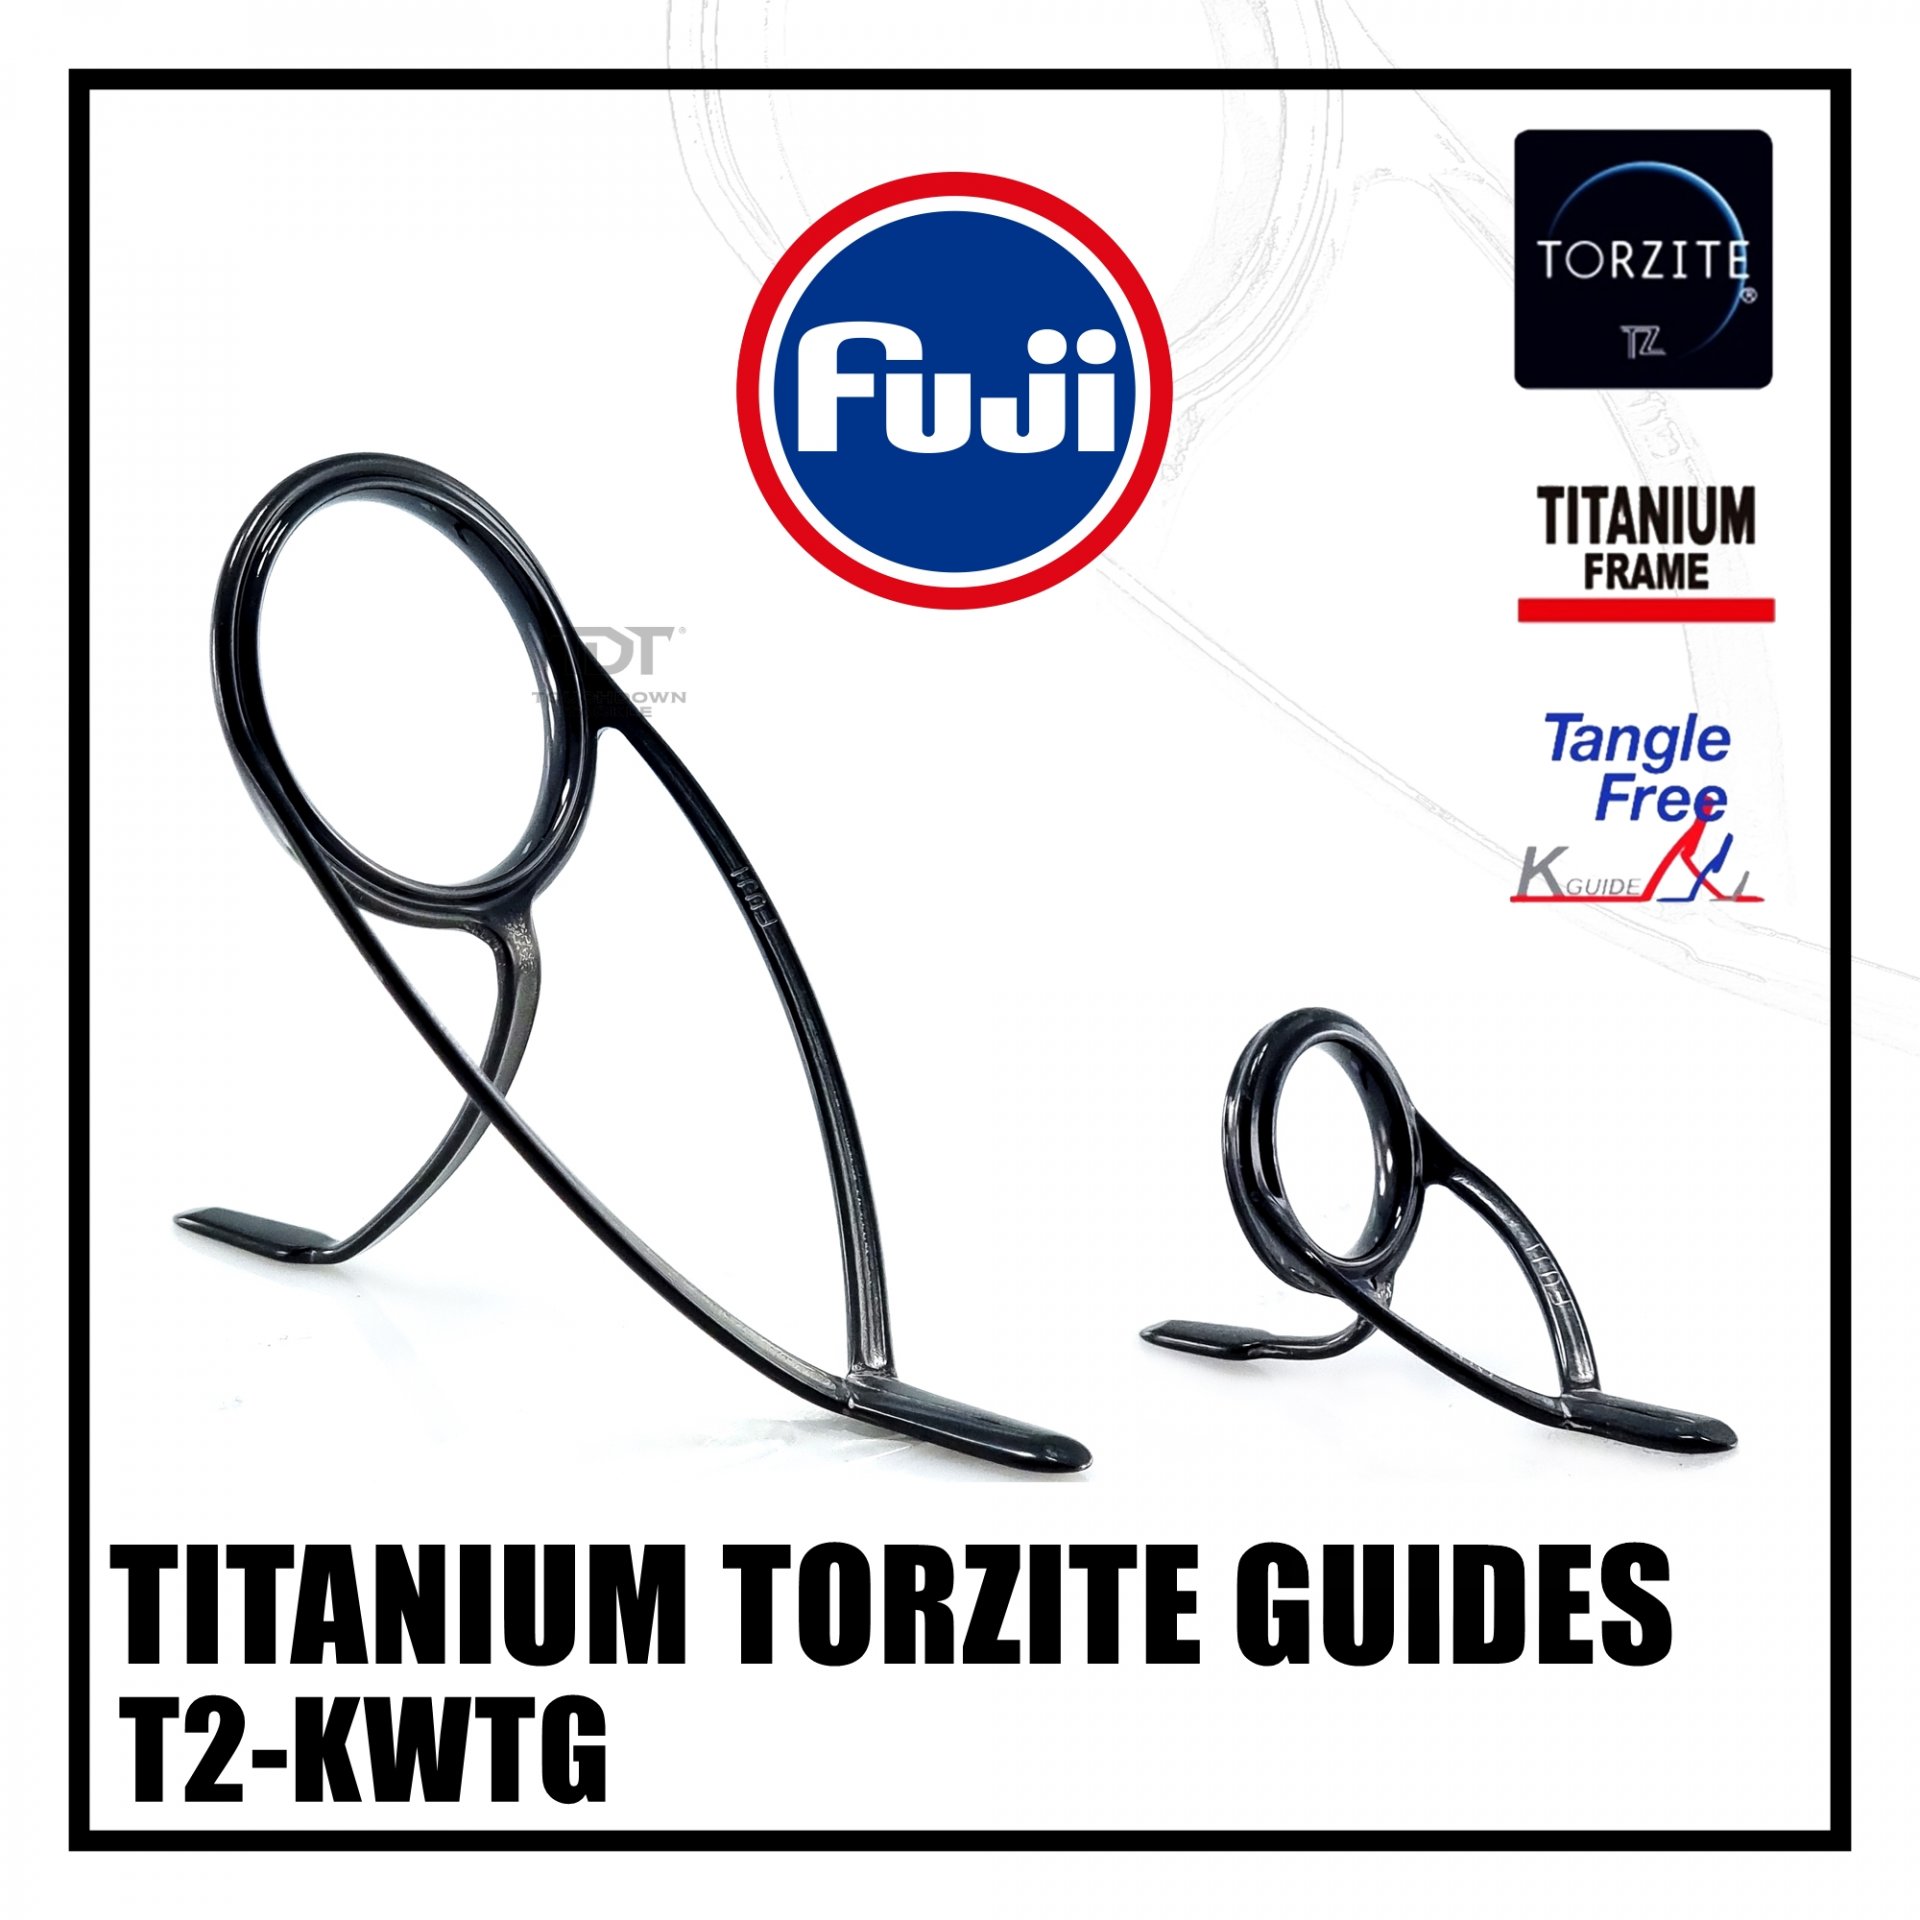 FUJI T2-KWTG TITANIUM TORZITE มาตราฐานสูง ยอดนิยม ใช้กันทั่วโลก แท้ญี่ปุ่น 100%